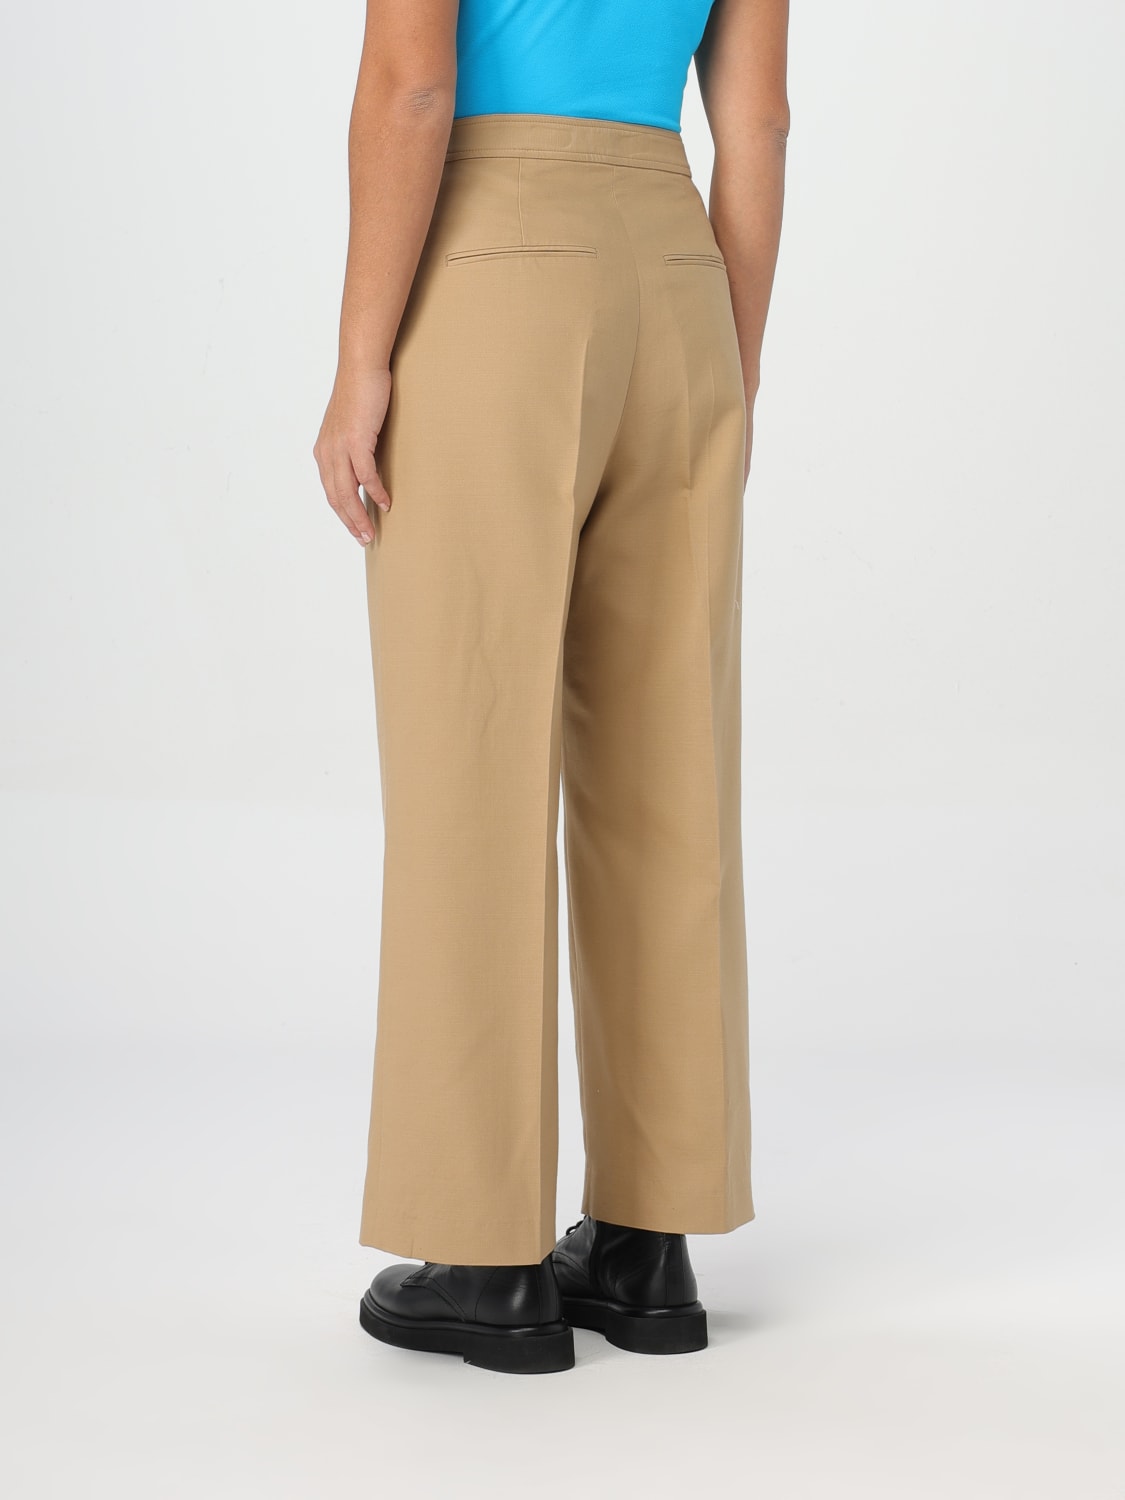 POLO RALPH LAUREN: Pants woman - Beige  POLO RALPH LAUREN pants  211924799001 online at